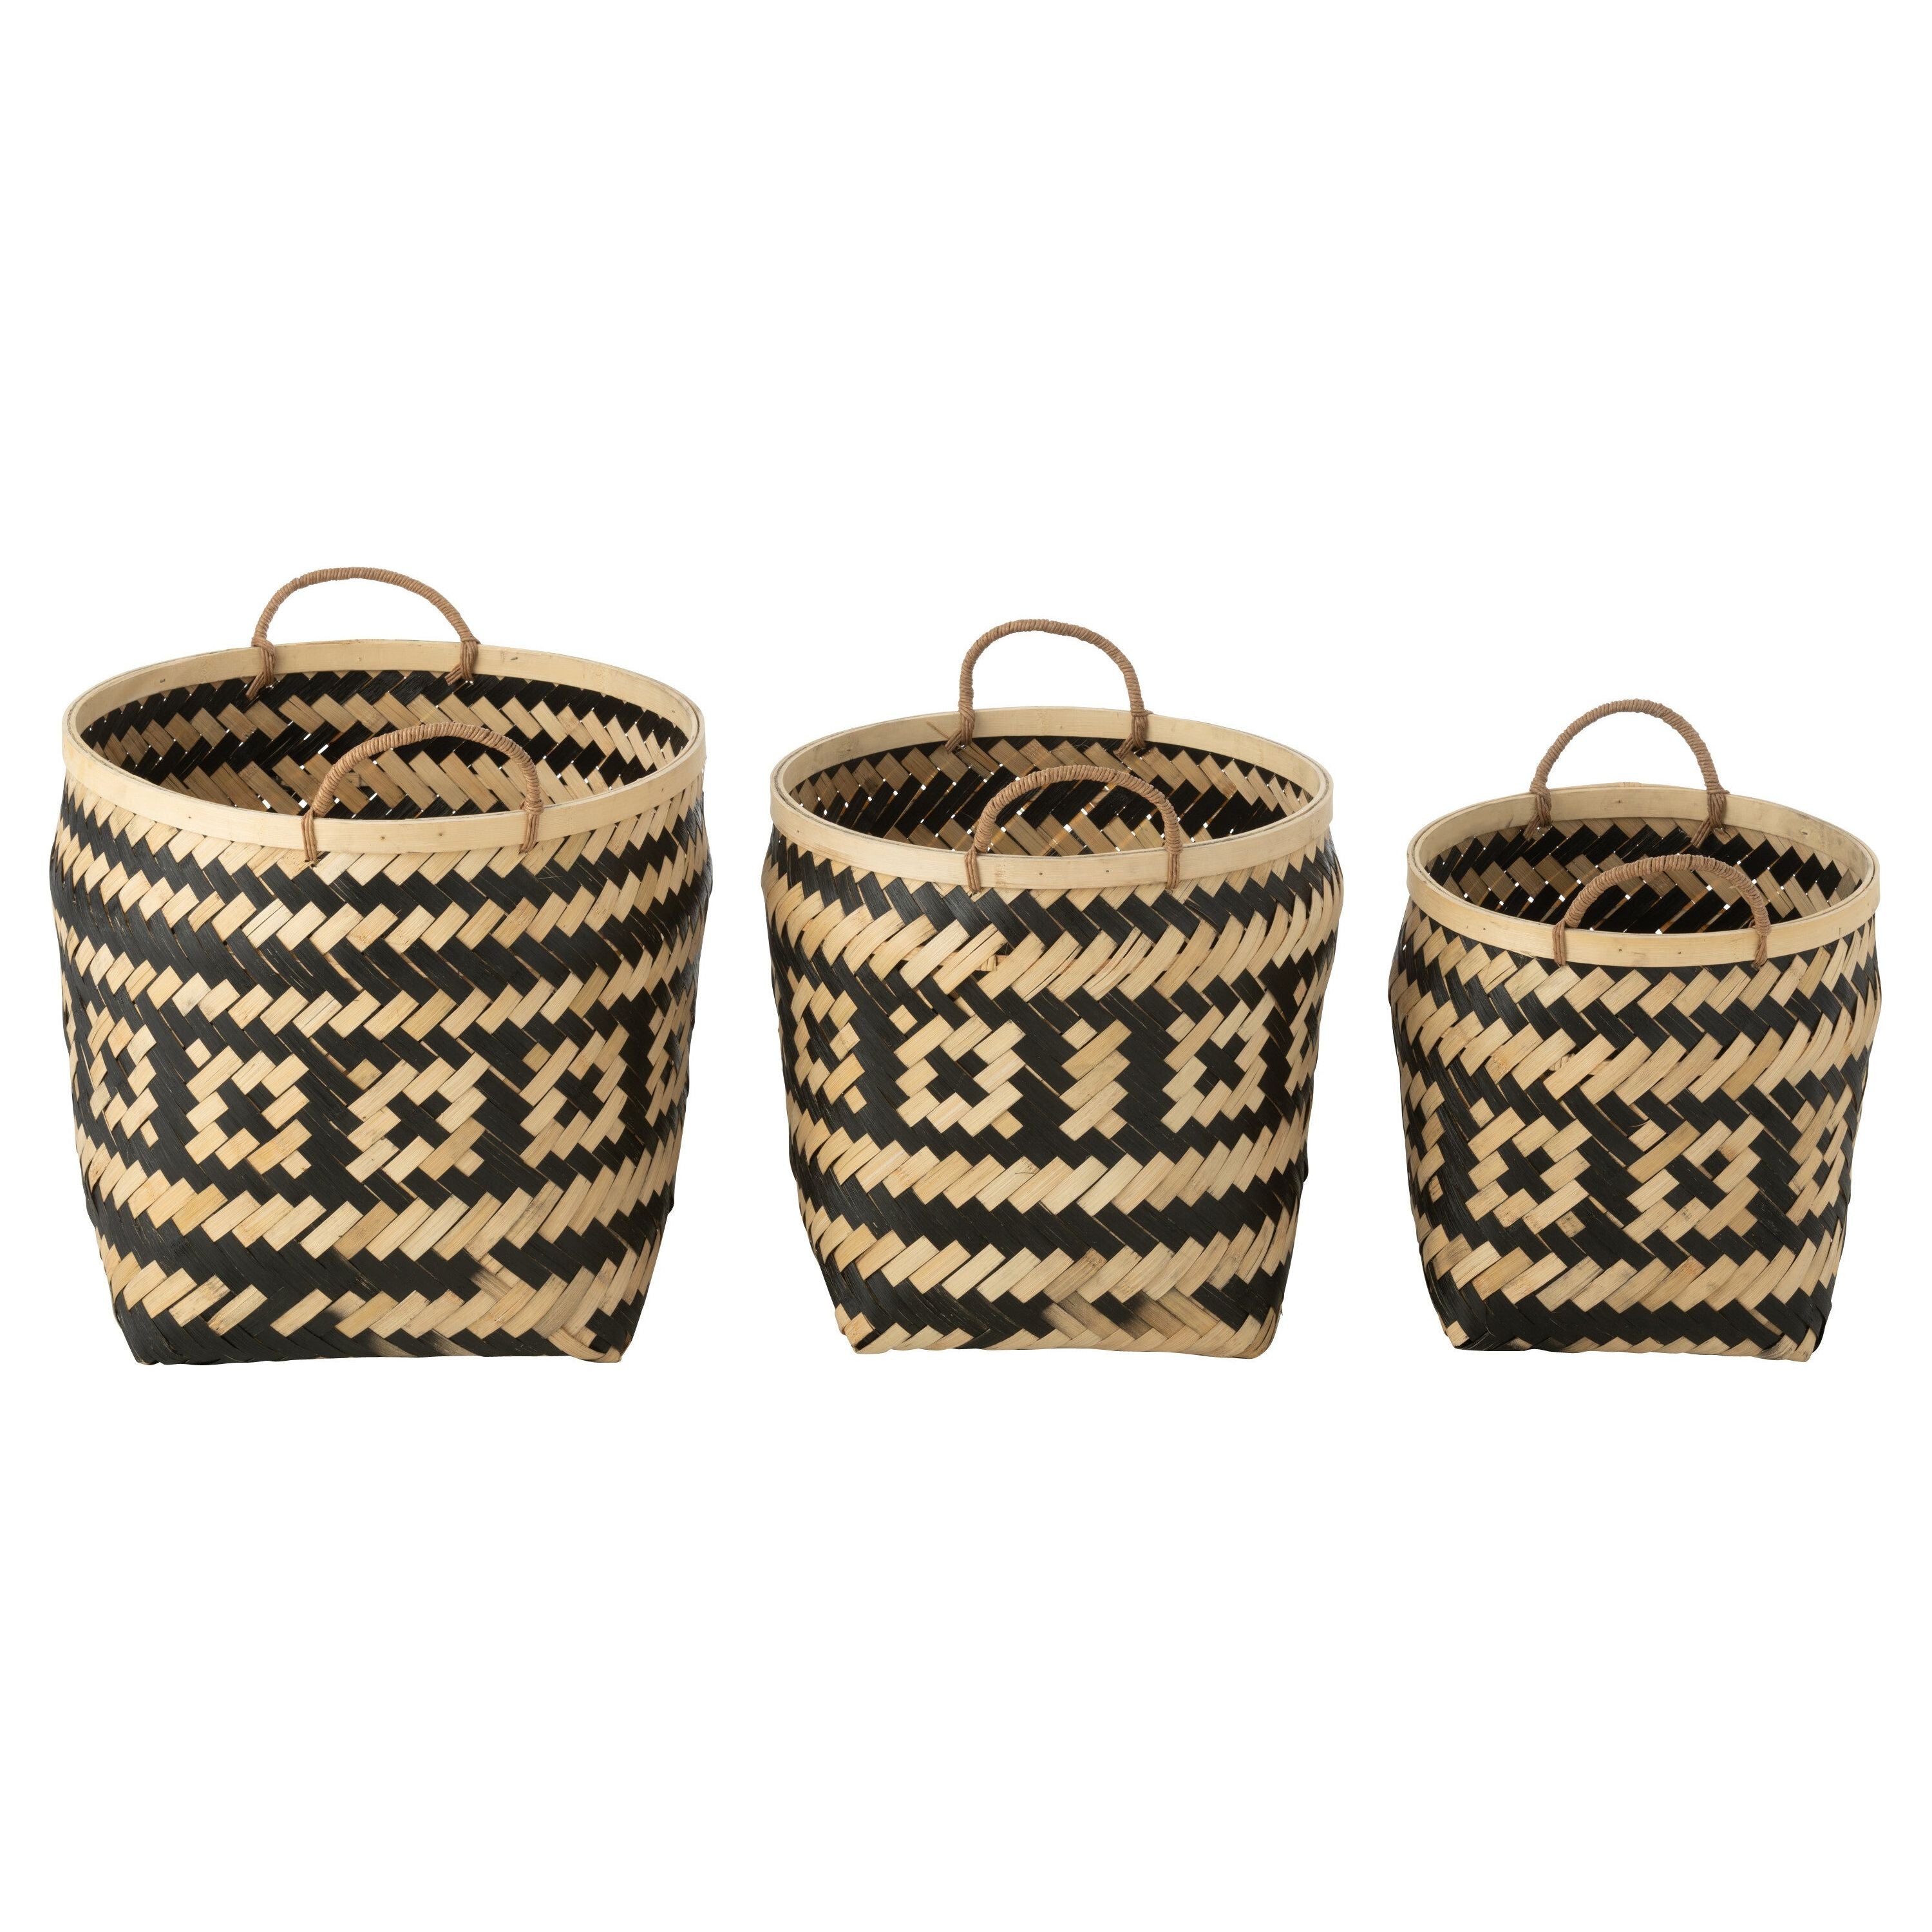 Basket Patterns Handles Bamboo Natural/black